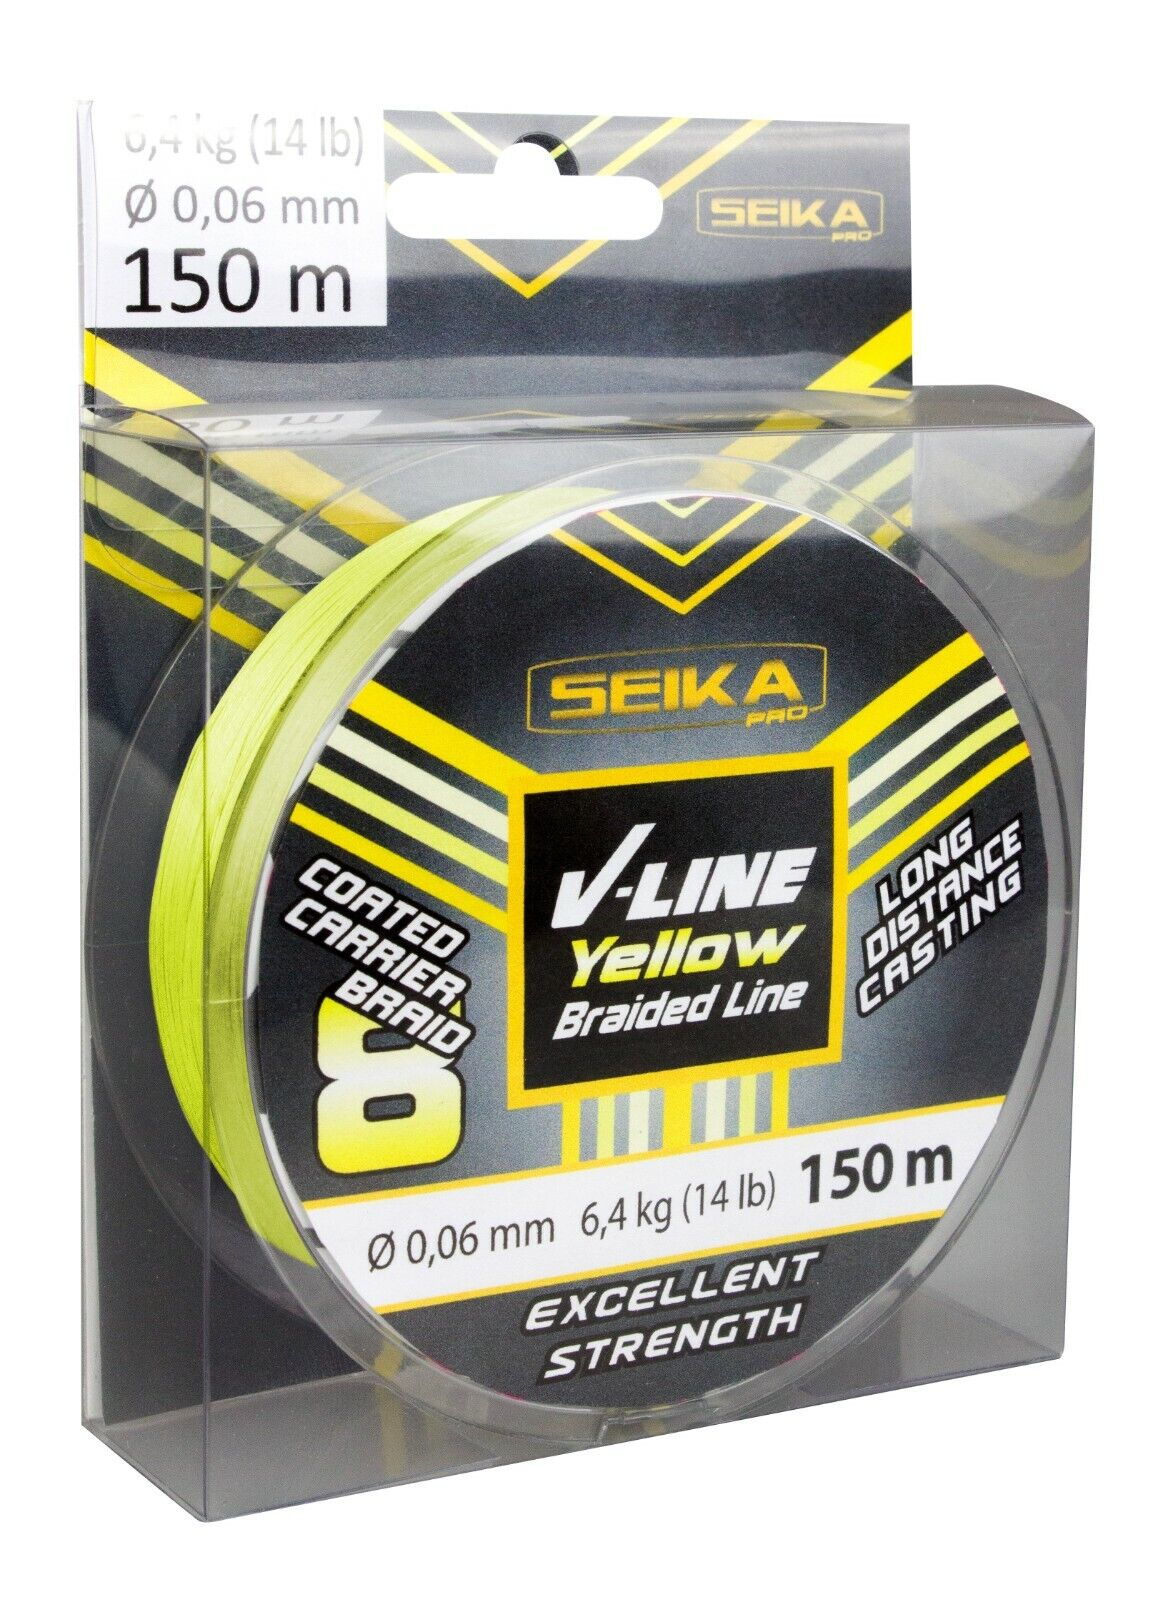 Seika V- Line Yellow